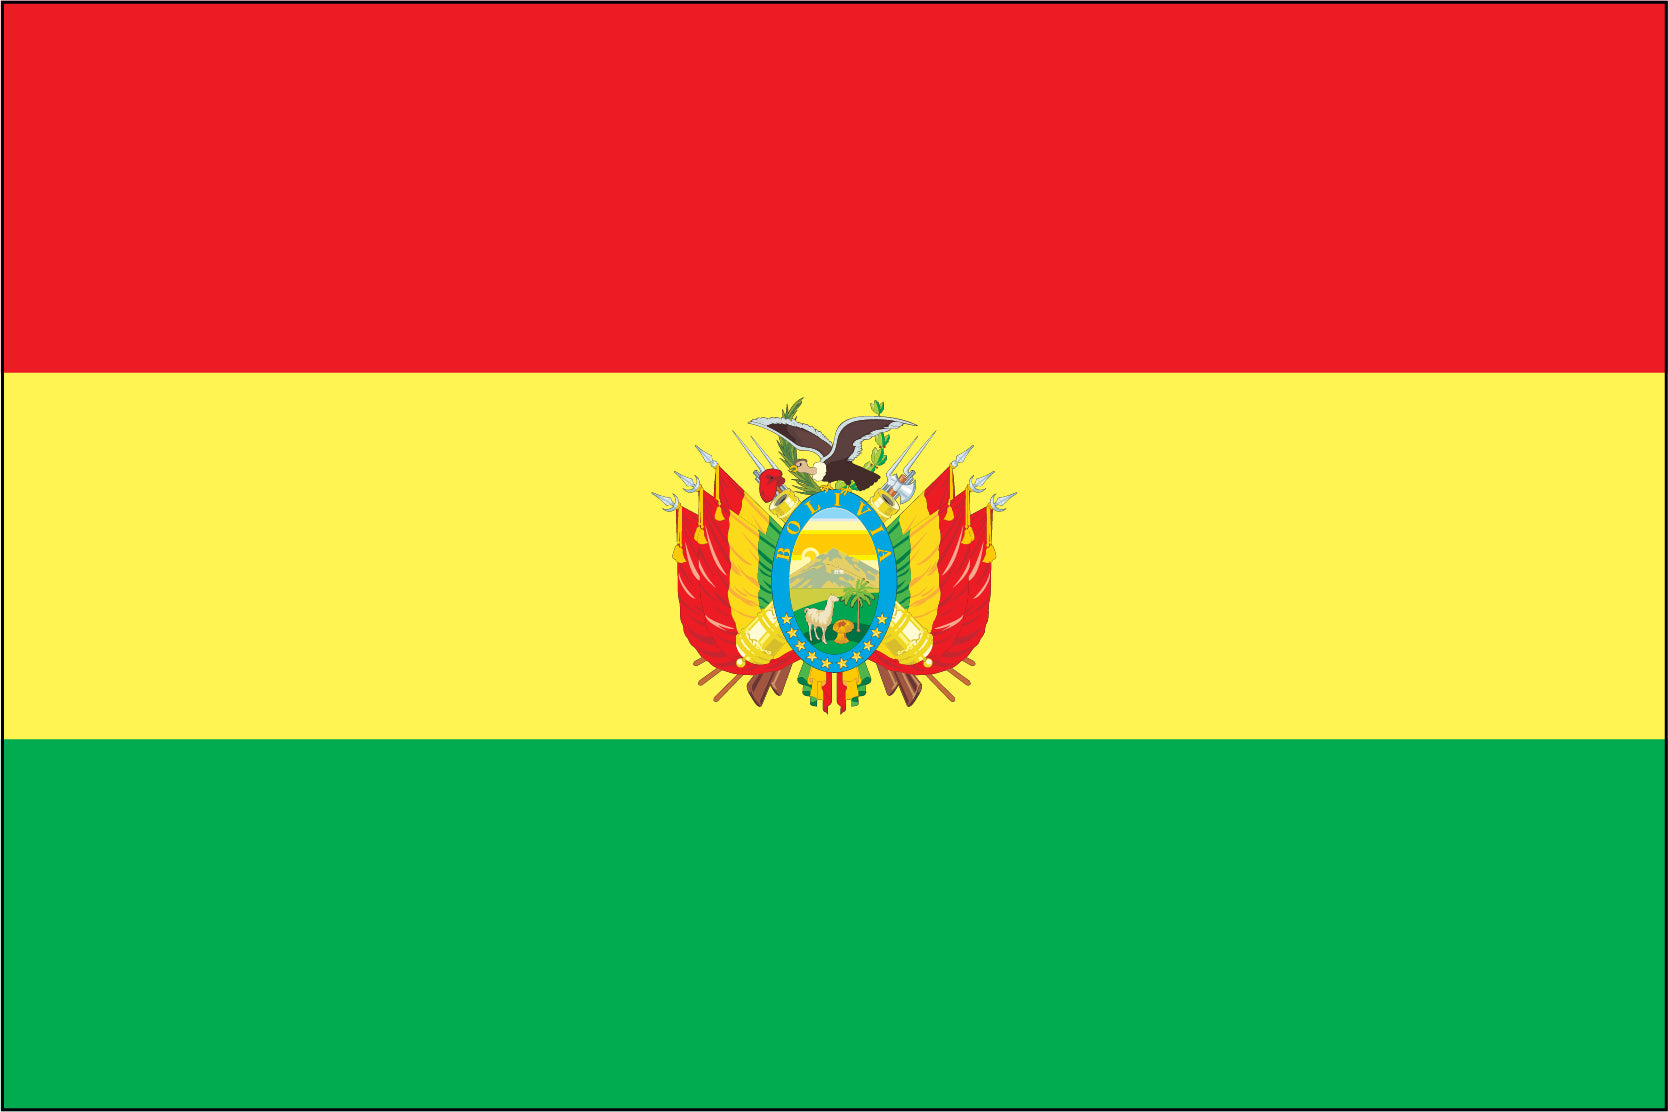 Bolivia (Governmental Seal)